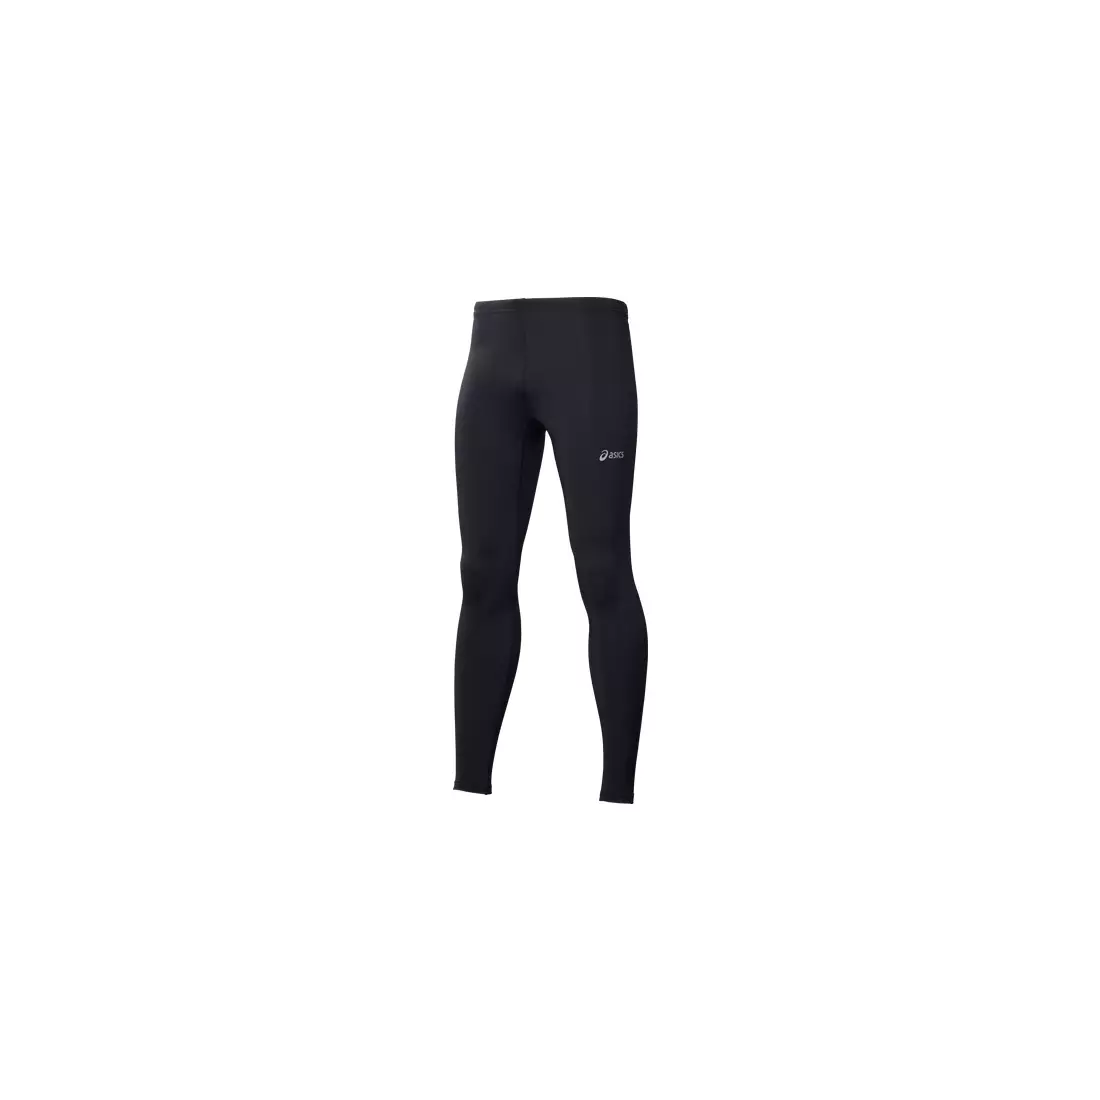 ASICS 113462-0904 - men's ESSENTIAL TIGHT pants, color: black